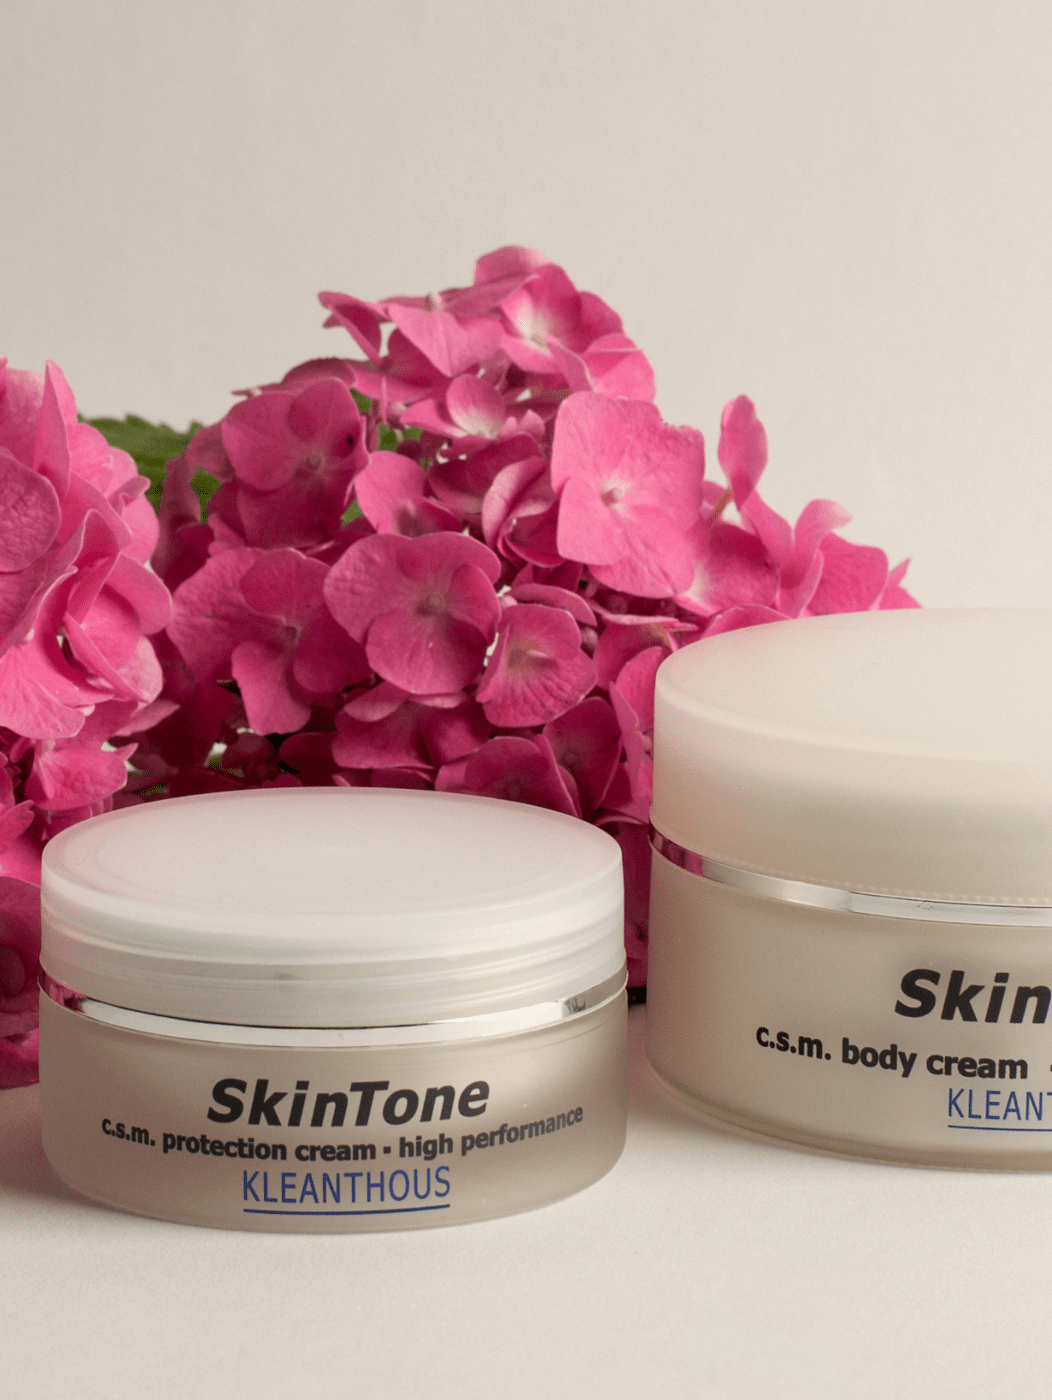 SkinTone c.s.m. protection cream 50 ml